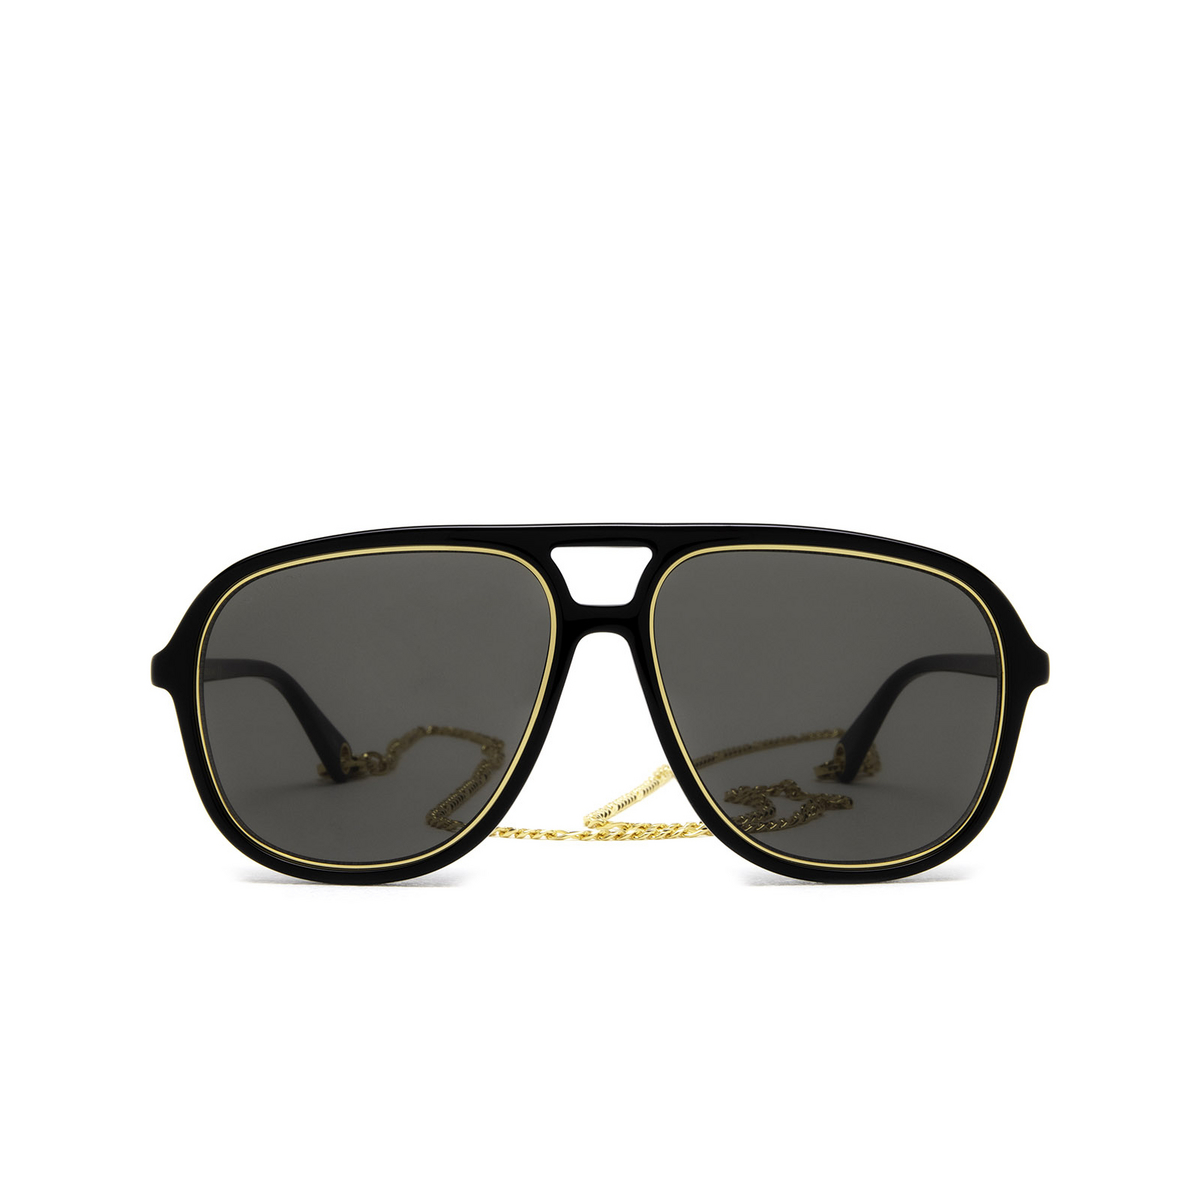 Gucci® Aviator Sunglasses: GG1077S color Black 001 - front view.